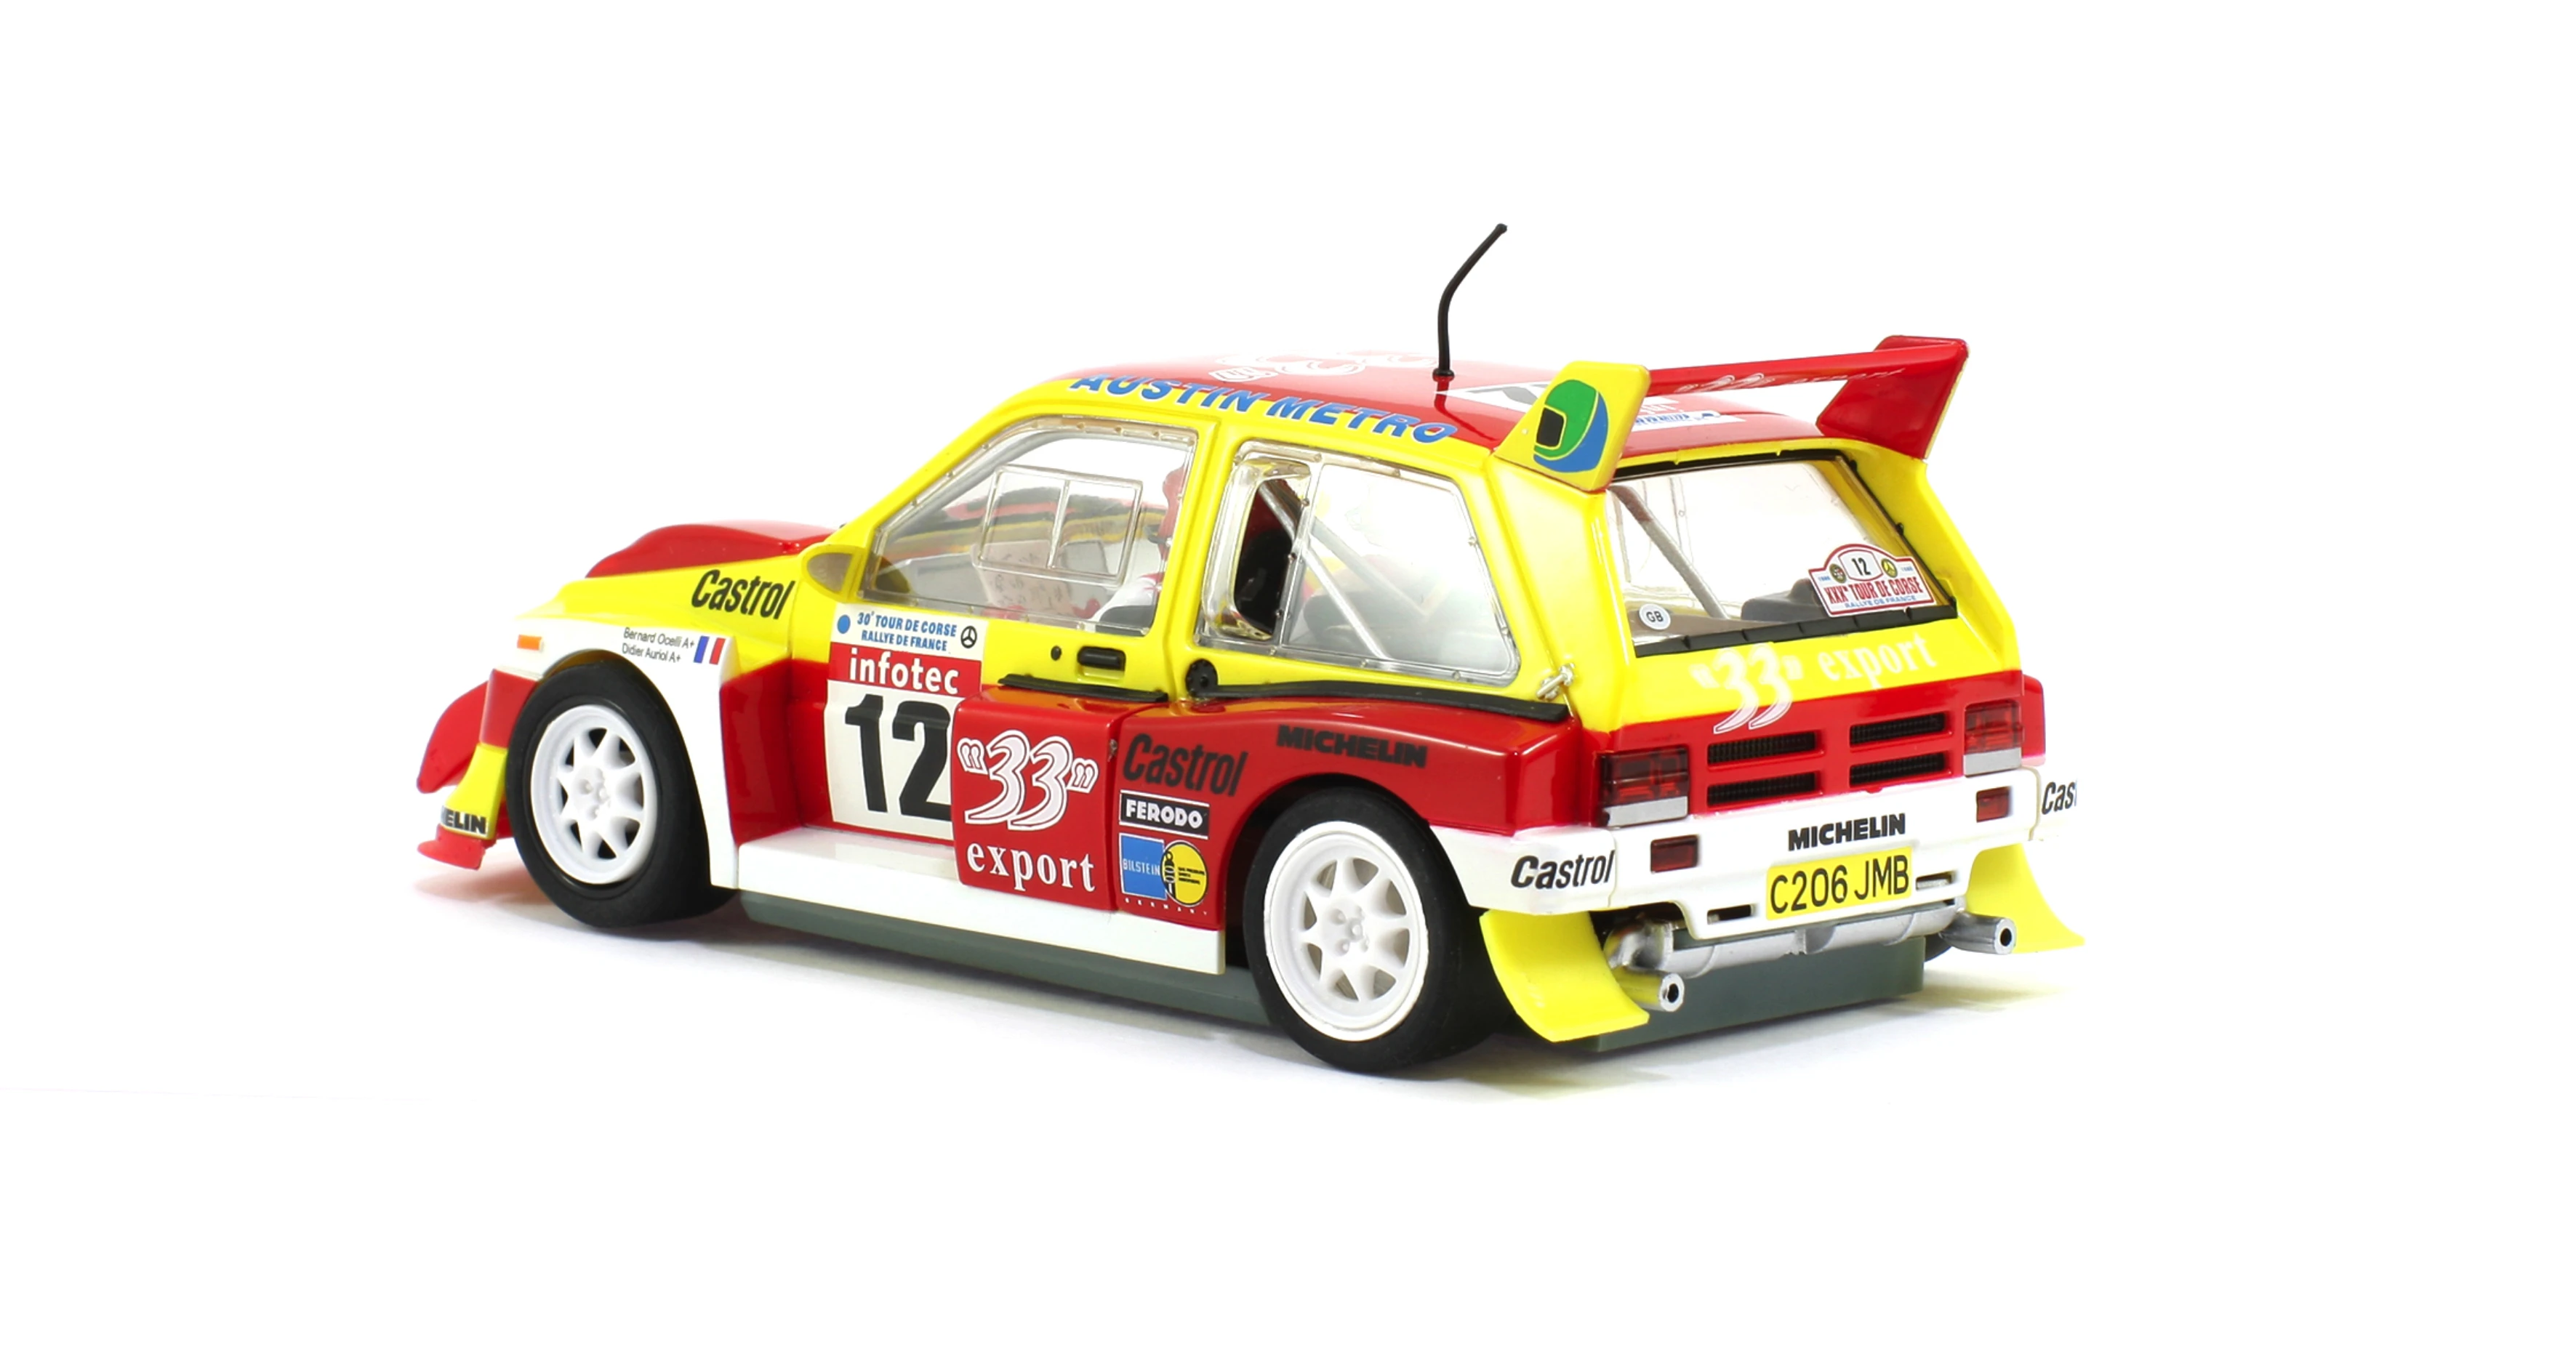 Decals MG Metro 6R4 1986 Test Rally Wales 1:32 1:43 1:24 1:18 slot Senna calcas 